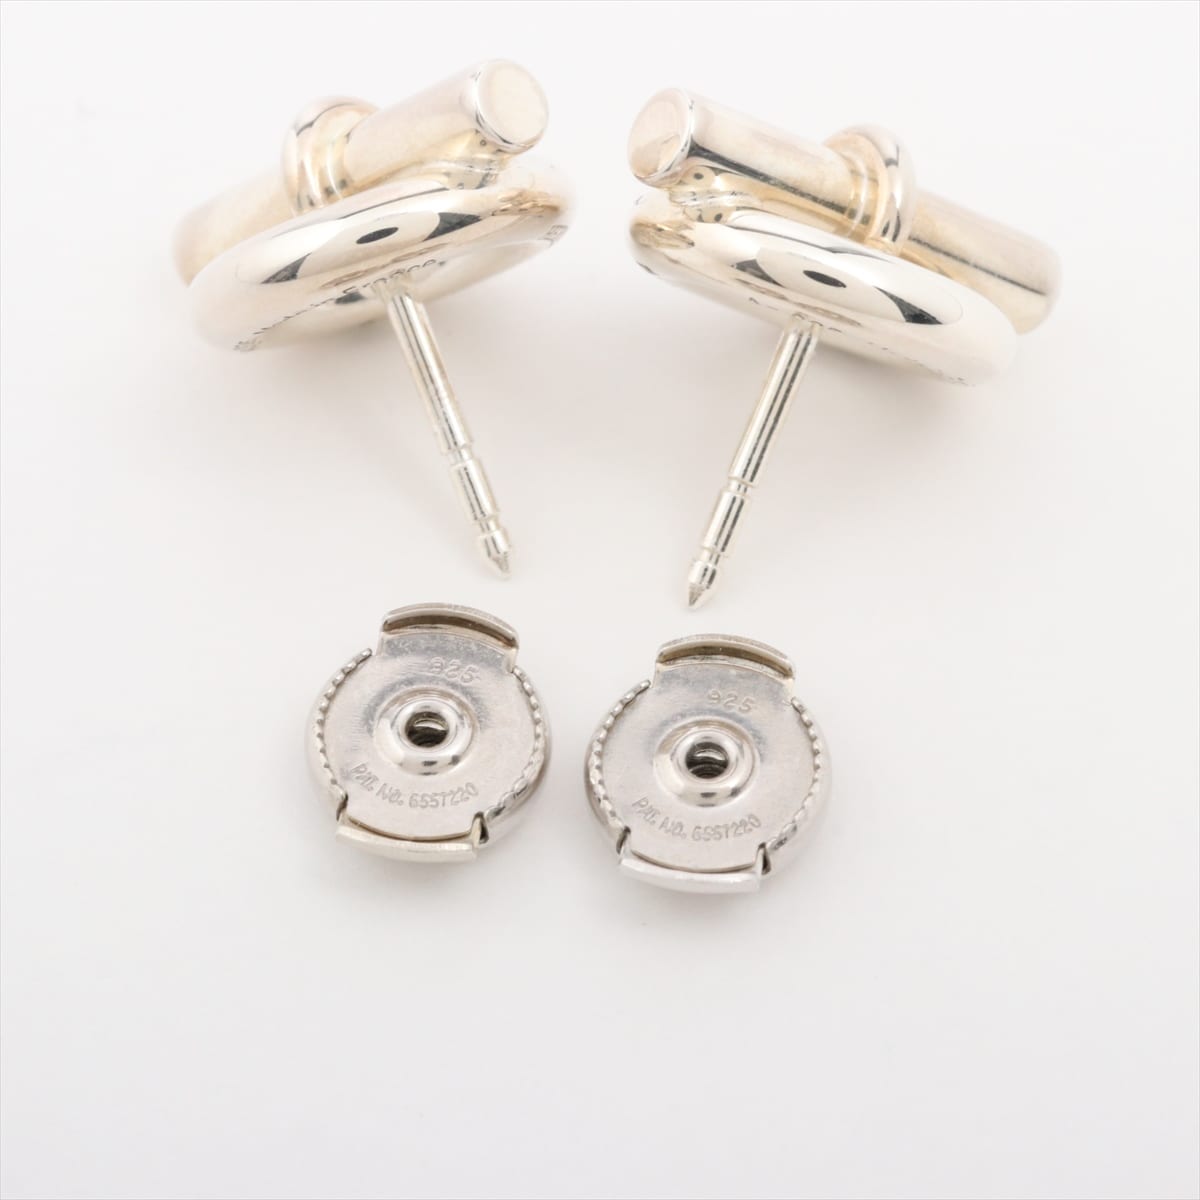 Hermès Chaîne d'Ancre Piercing jewelry (for both ears) 925 6.1g Silver